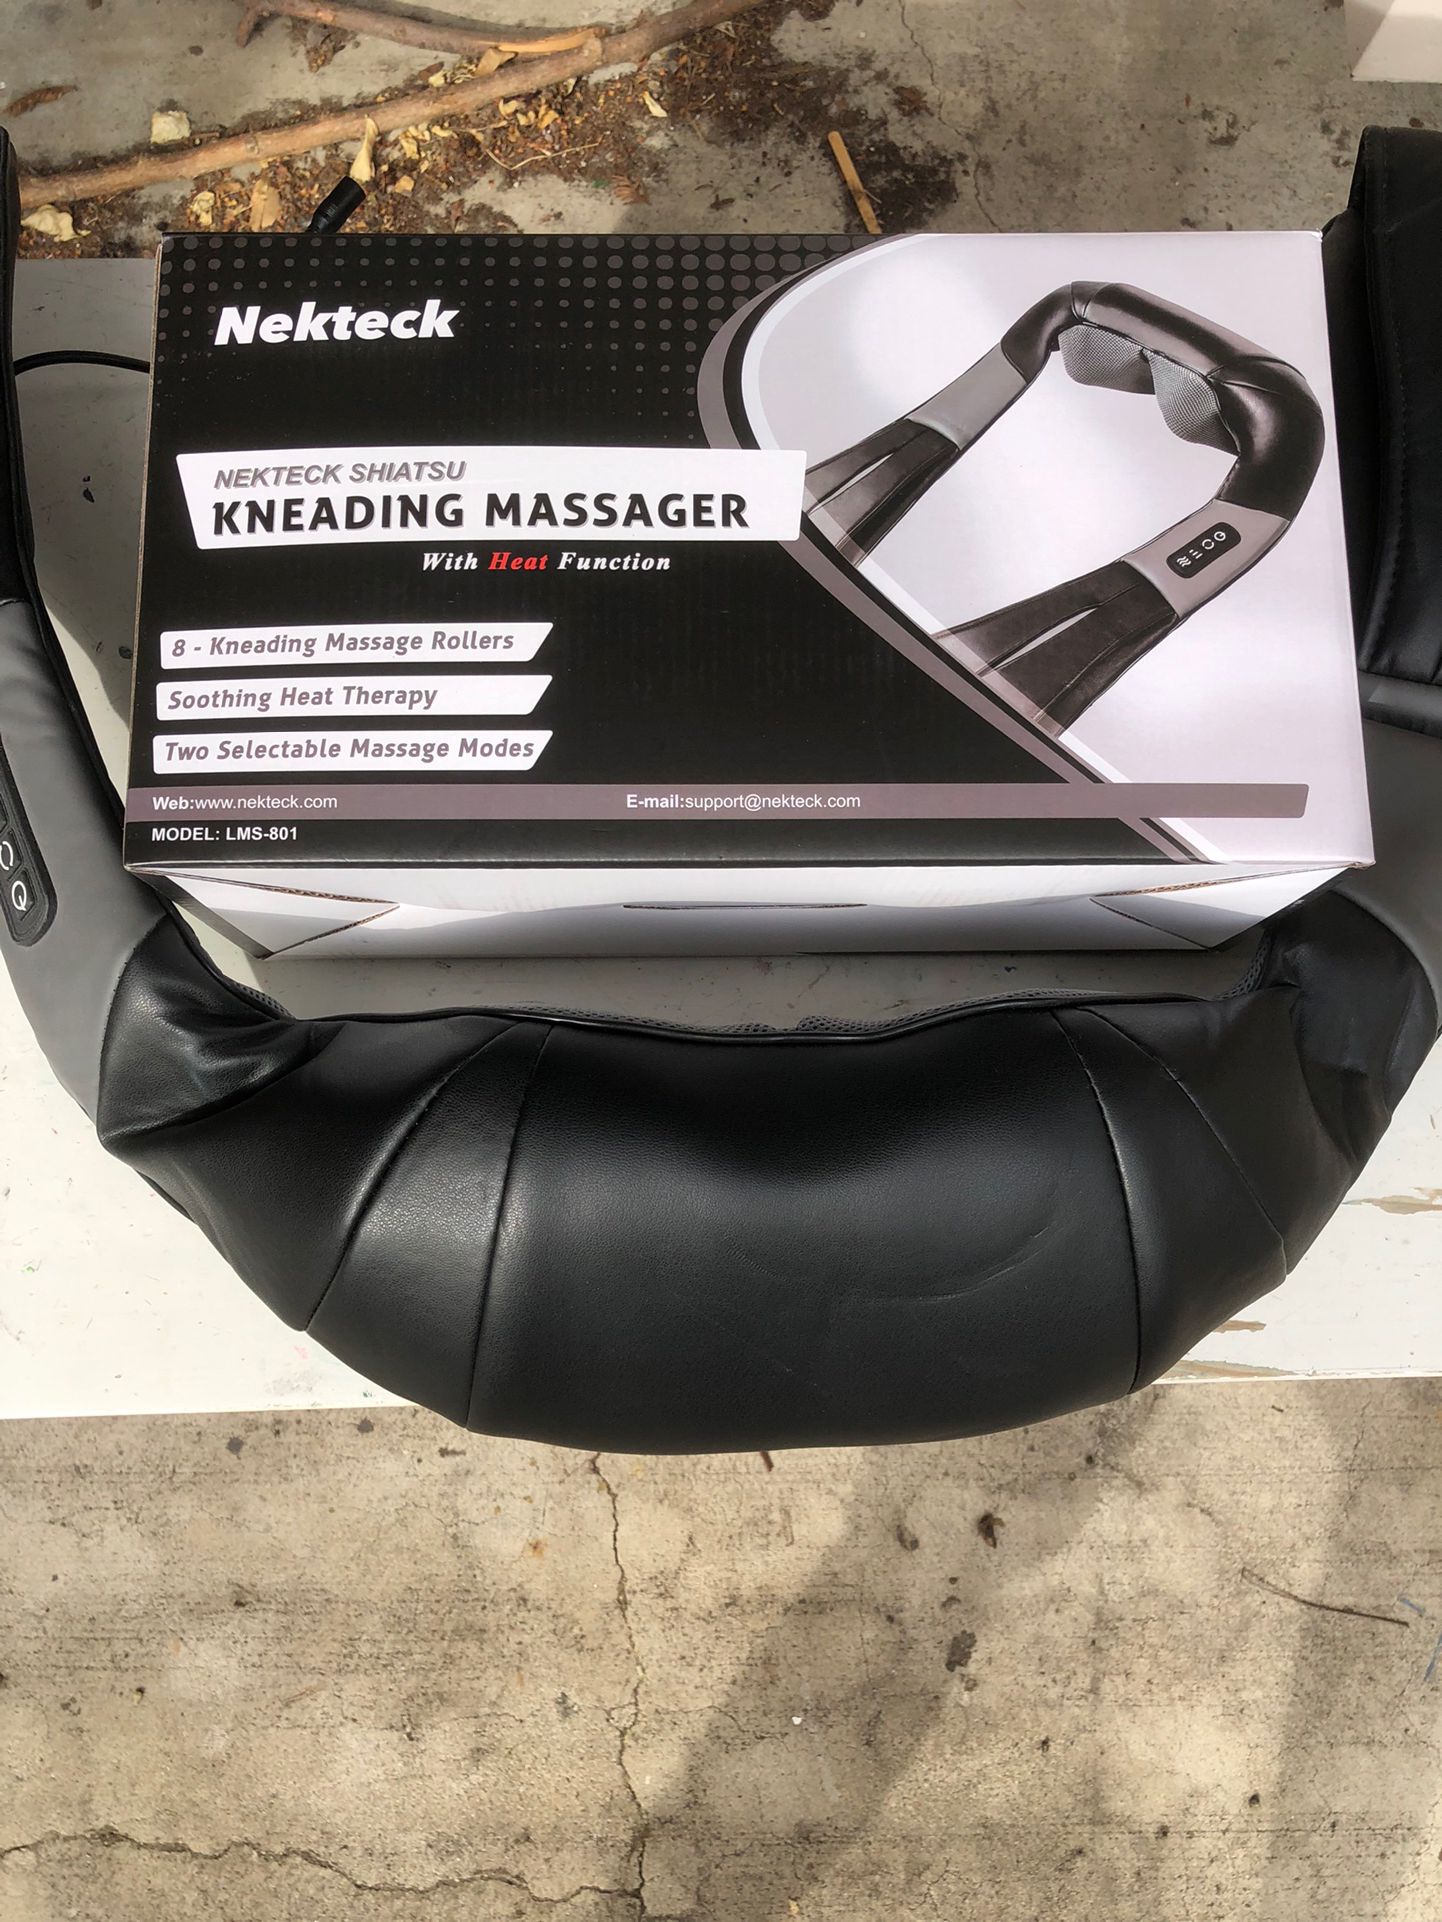 Nekteck Kneading Massager